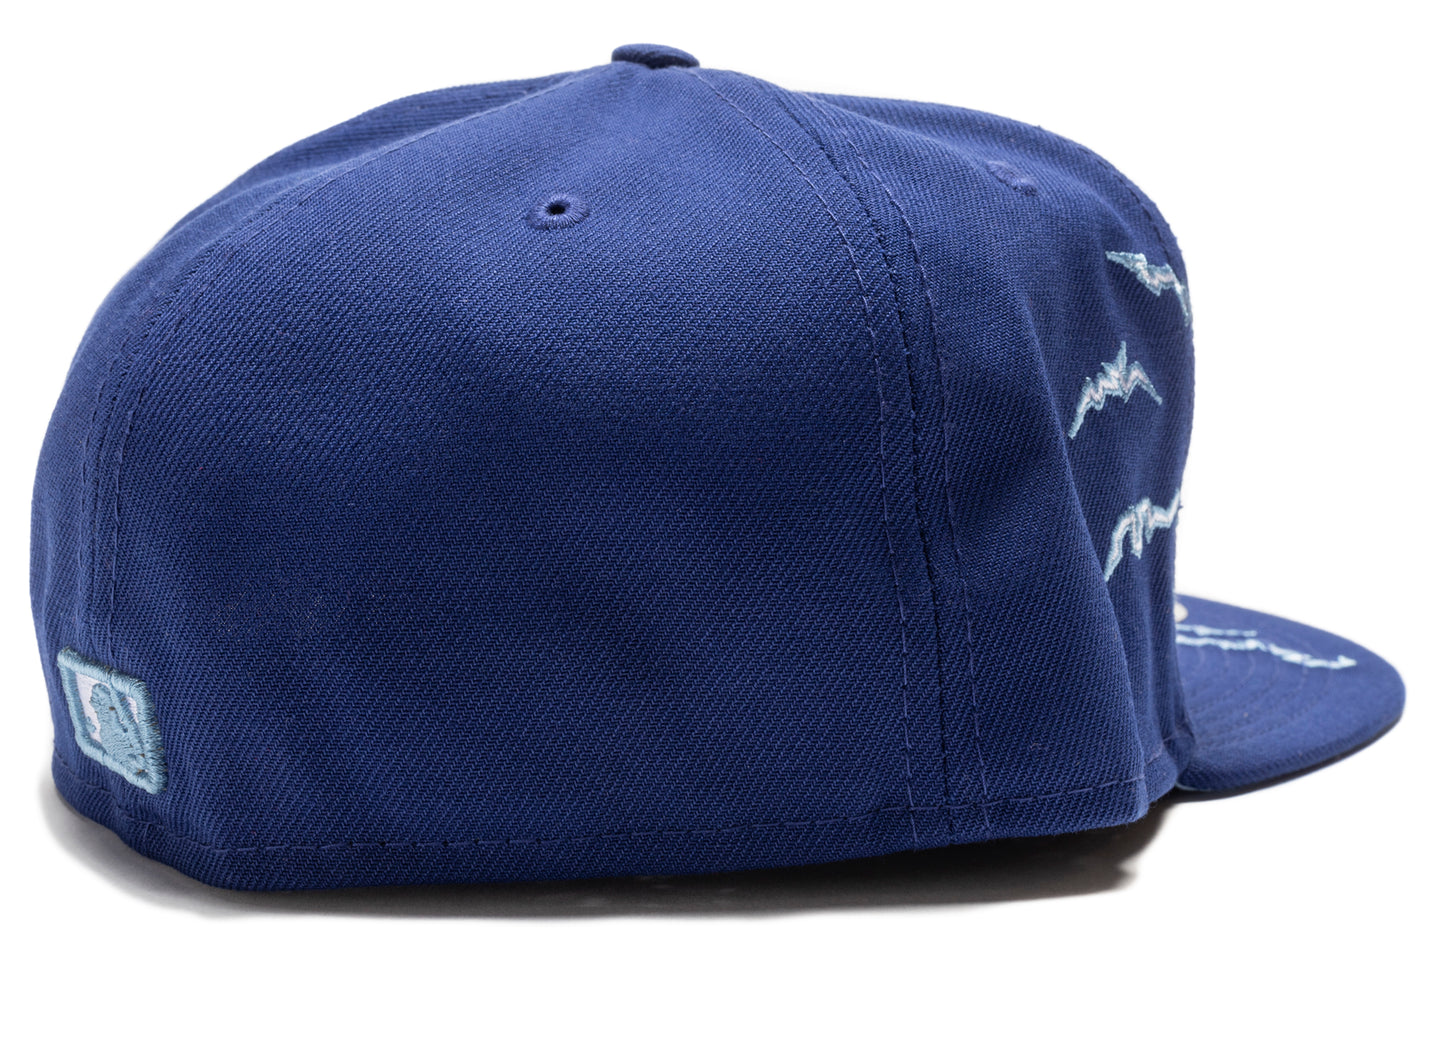 New Era Electrify Los Angeles Dodgers Hat